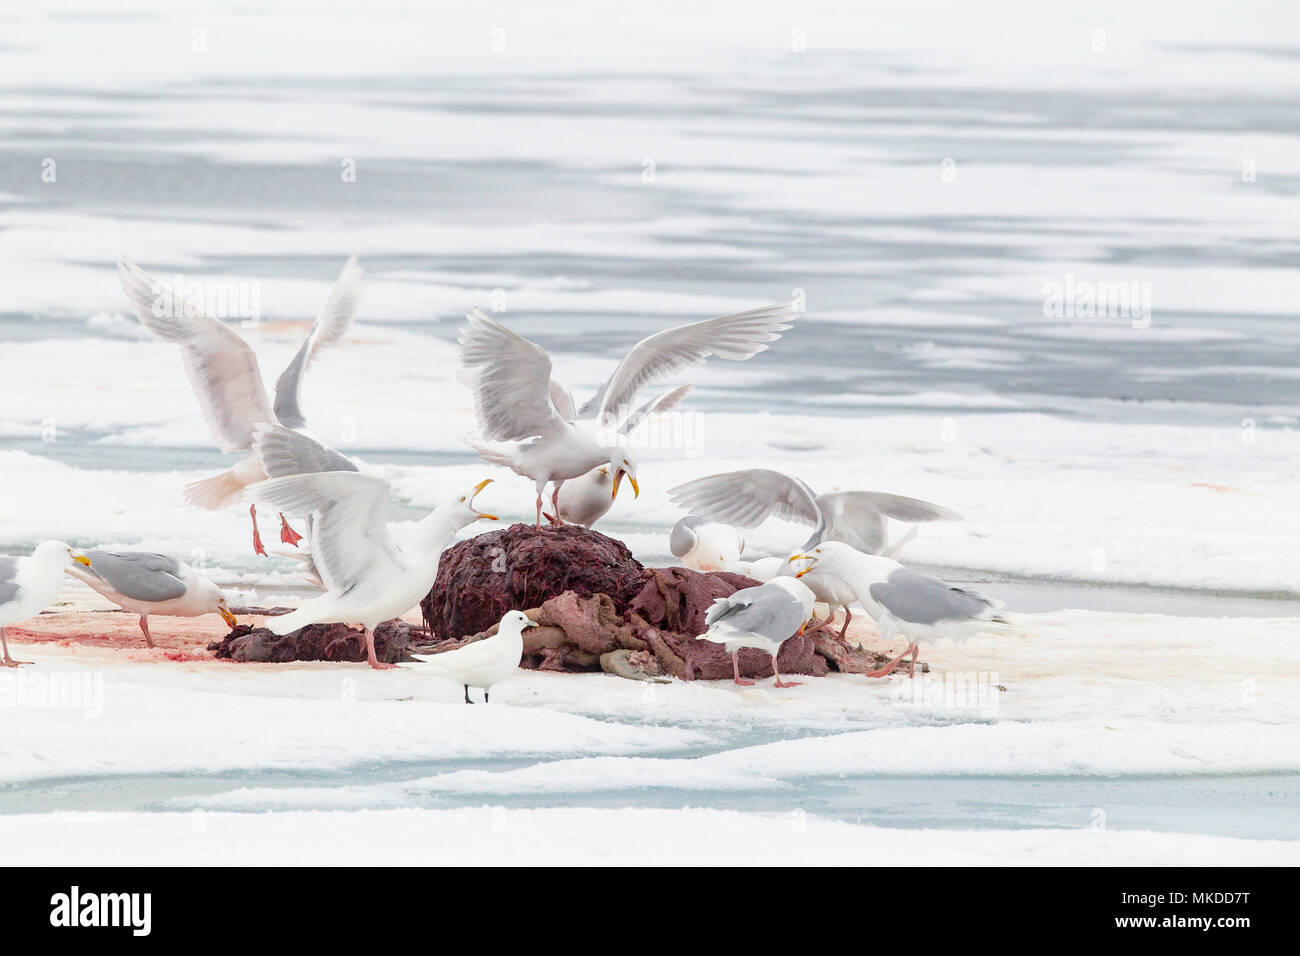 Glauco gabbiani (Larus hyperboreus) mangiando il rimanere di un tricheco (Odobenus rosmarus), sul ghiaccio, quando orso polare (Ursus maritimus) ha fine per mangiare. Spitsbergen, Svalbard Arcipelago norvegese, Norvegia, Oceano Artico Foto Stock